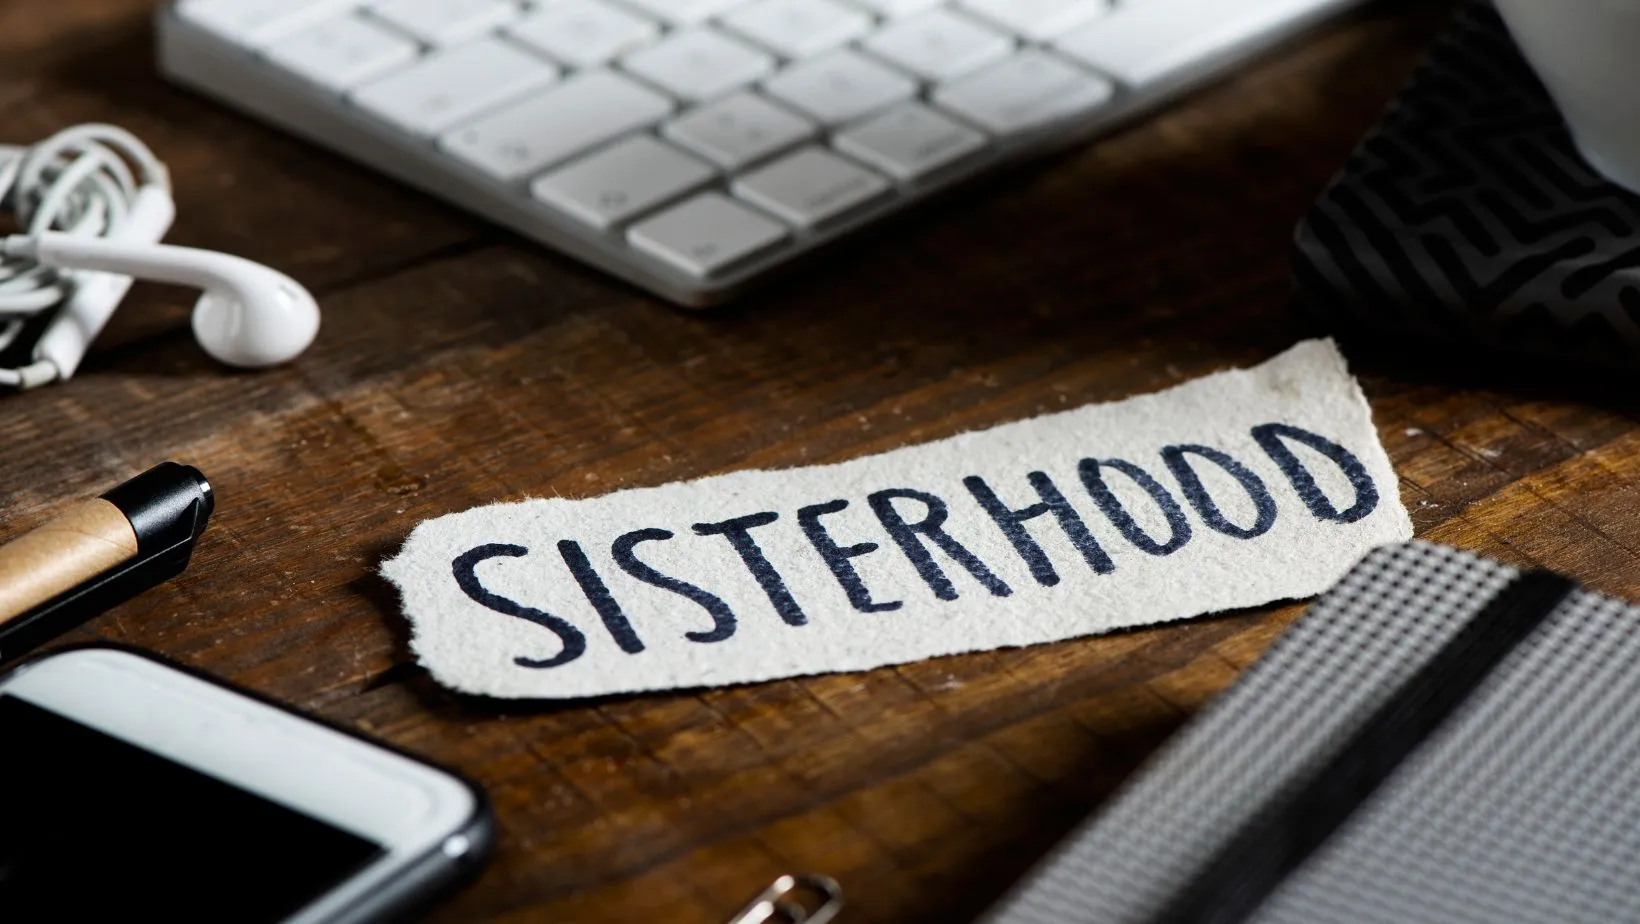 Lena Chapin Sisters: The Fascinating Story of Sibling Bonding